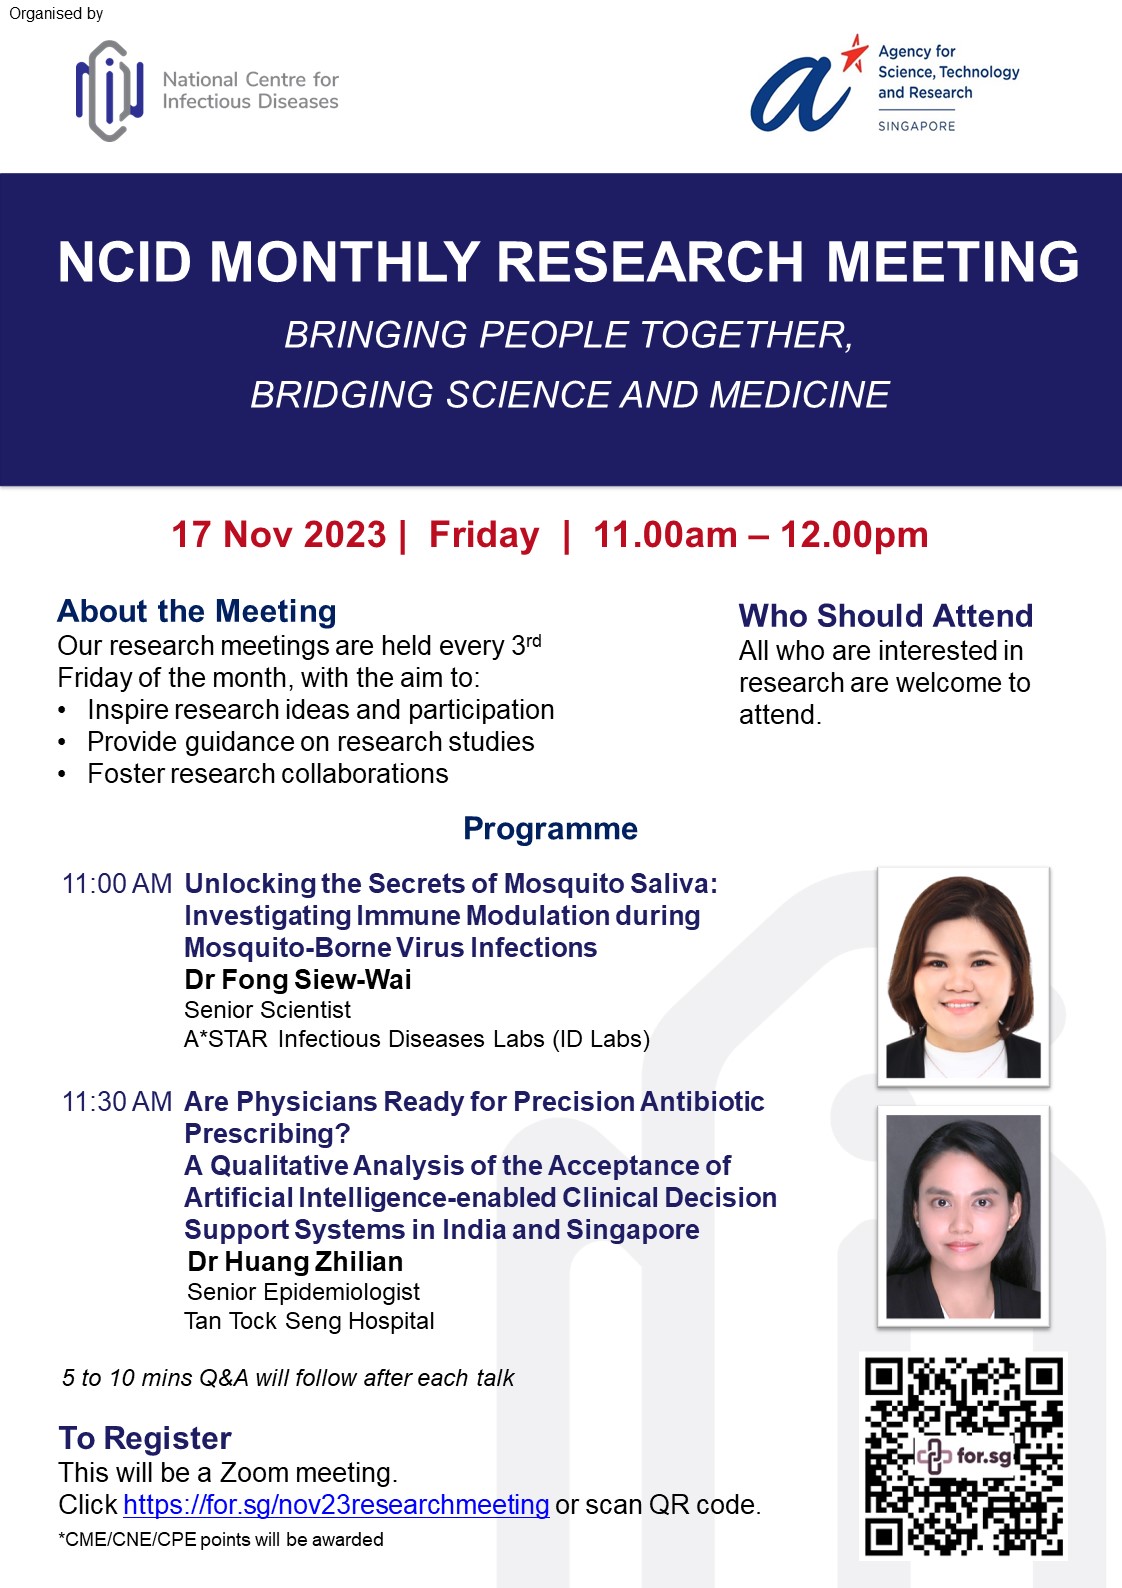 NCID Research Meeting Publicity Poster_Nov2023 (1).JPG